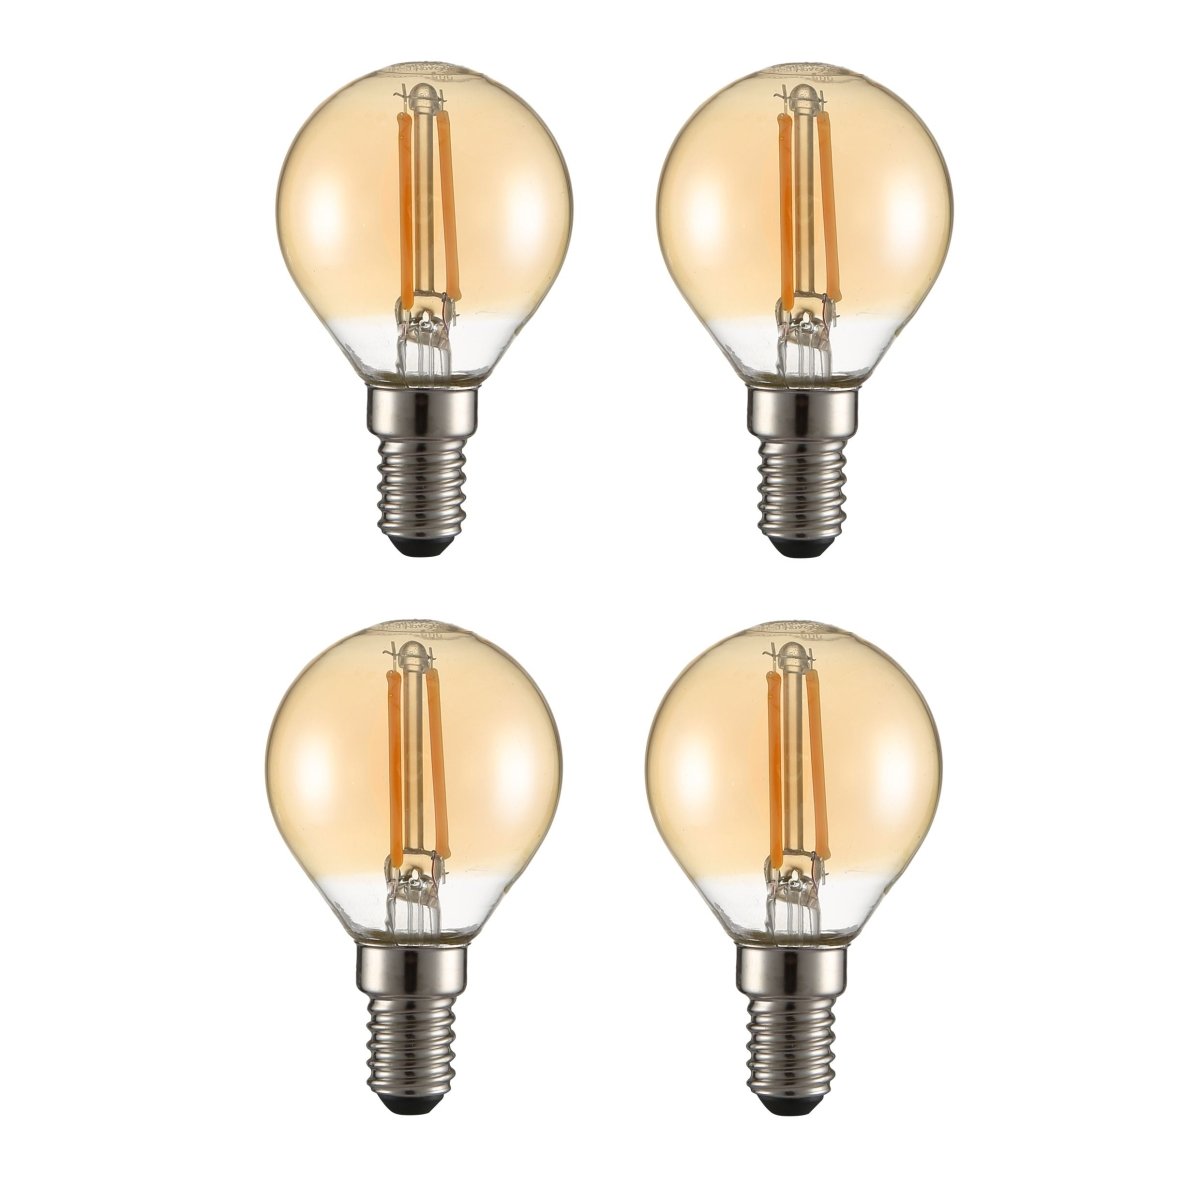 Main image of LED Filament Bulb P45 Golf Ball E14 Small Edison Screw 2W 220lm Warm White 2400K Amber Pack of 4 | TEKLED 583-150222